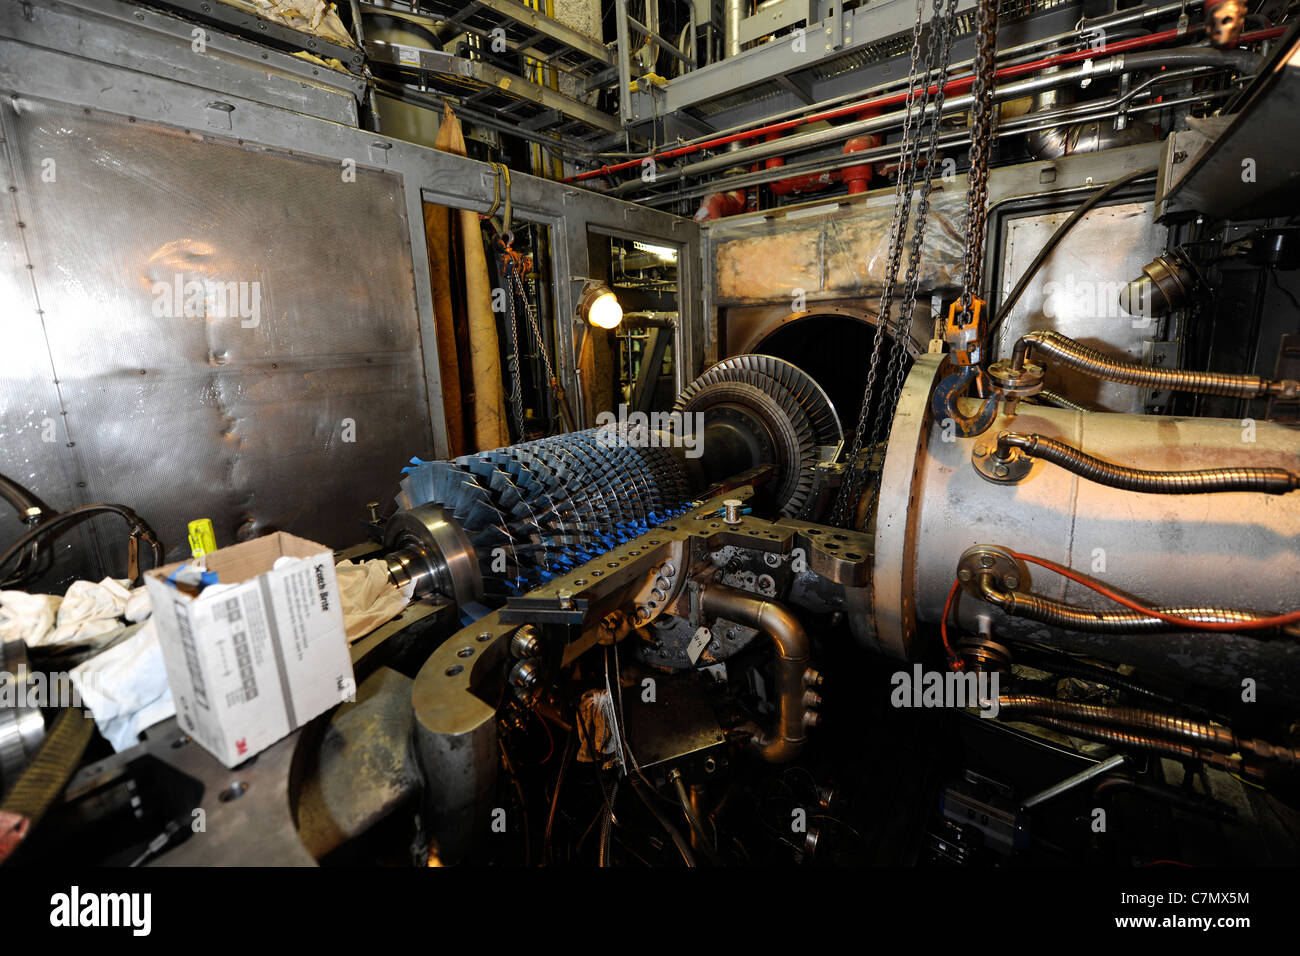 Inside of a power generation gas turbine.  Yale University power plant. Stock Photo